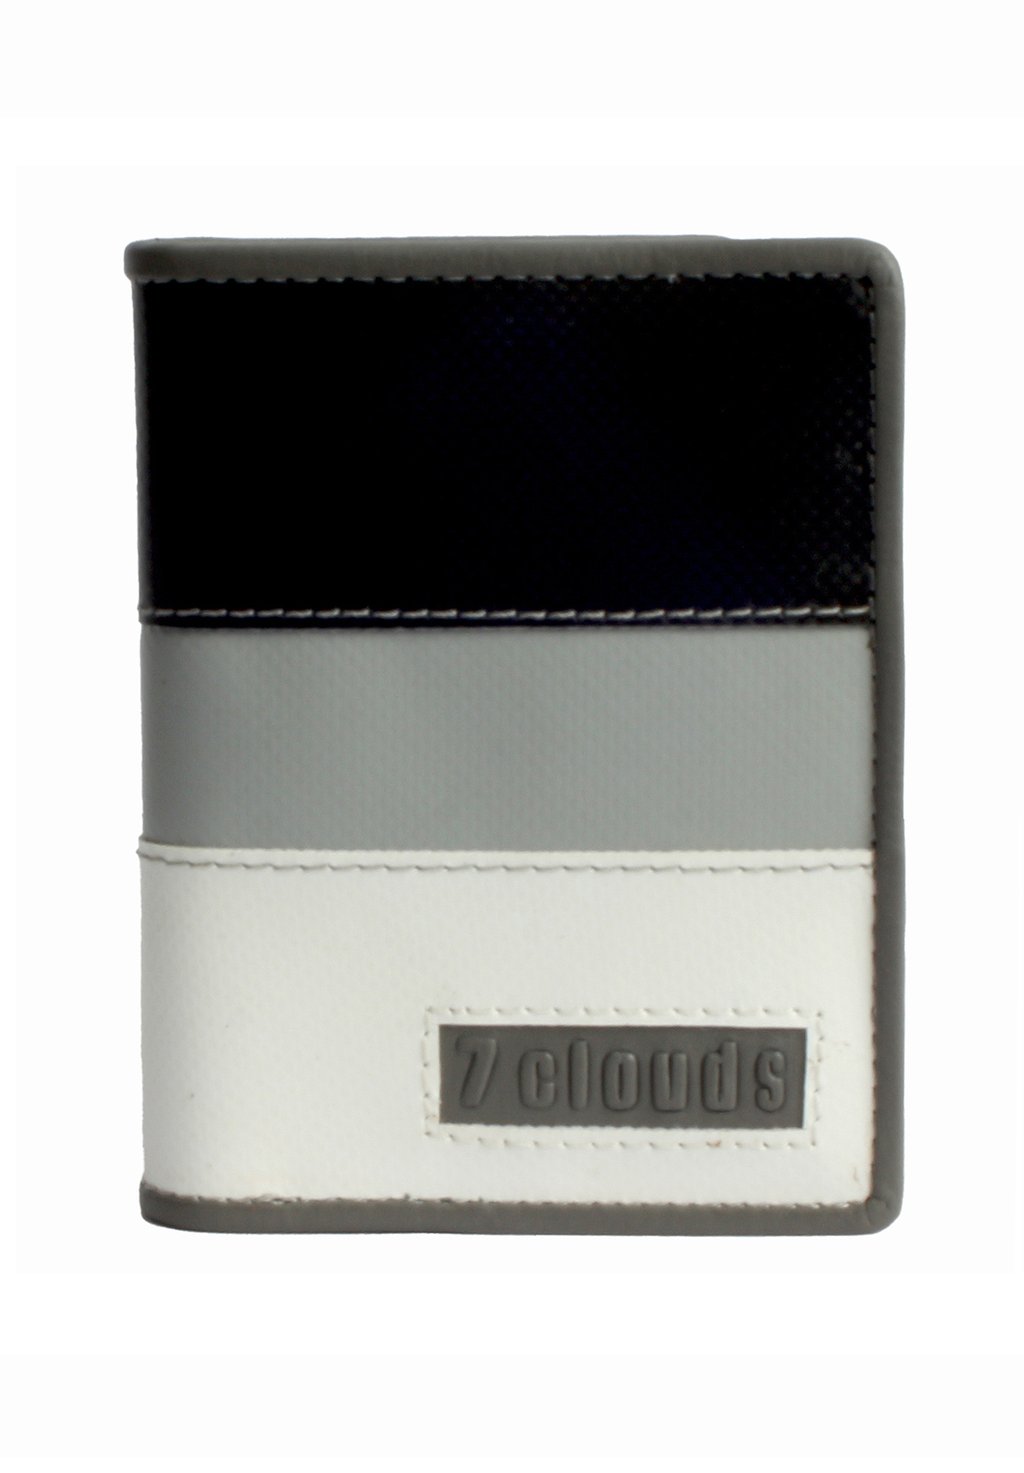 Кошелек RFID-KERON 71 7Clouds, цвет white grey black